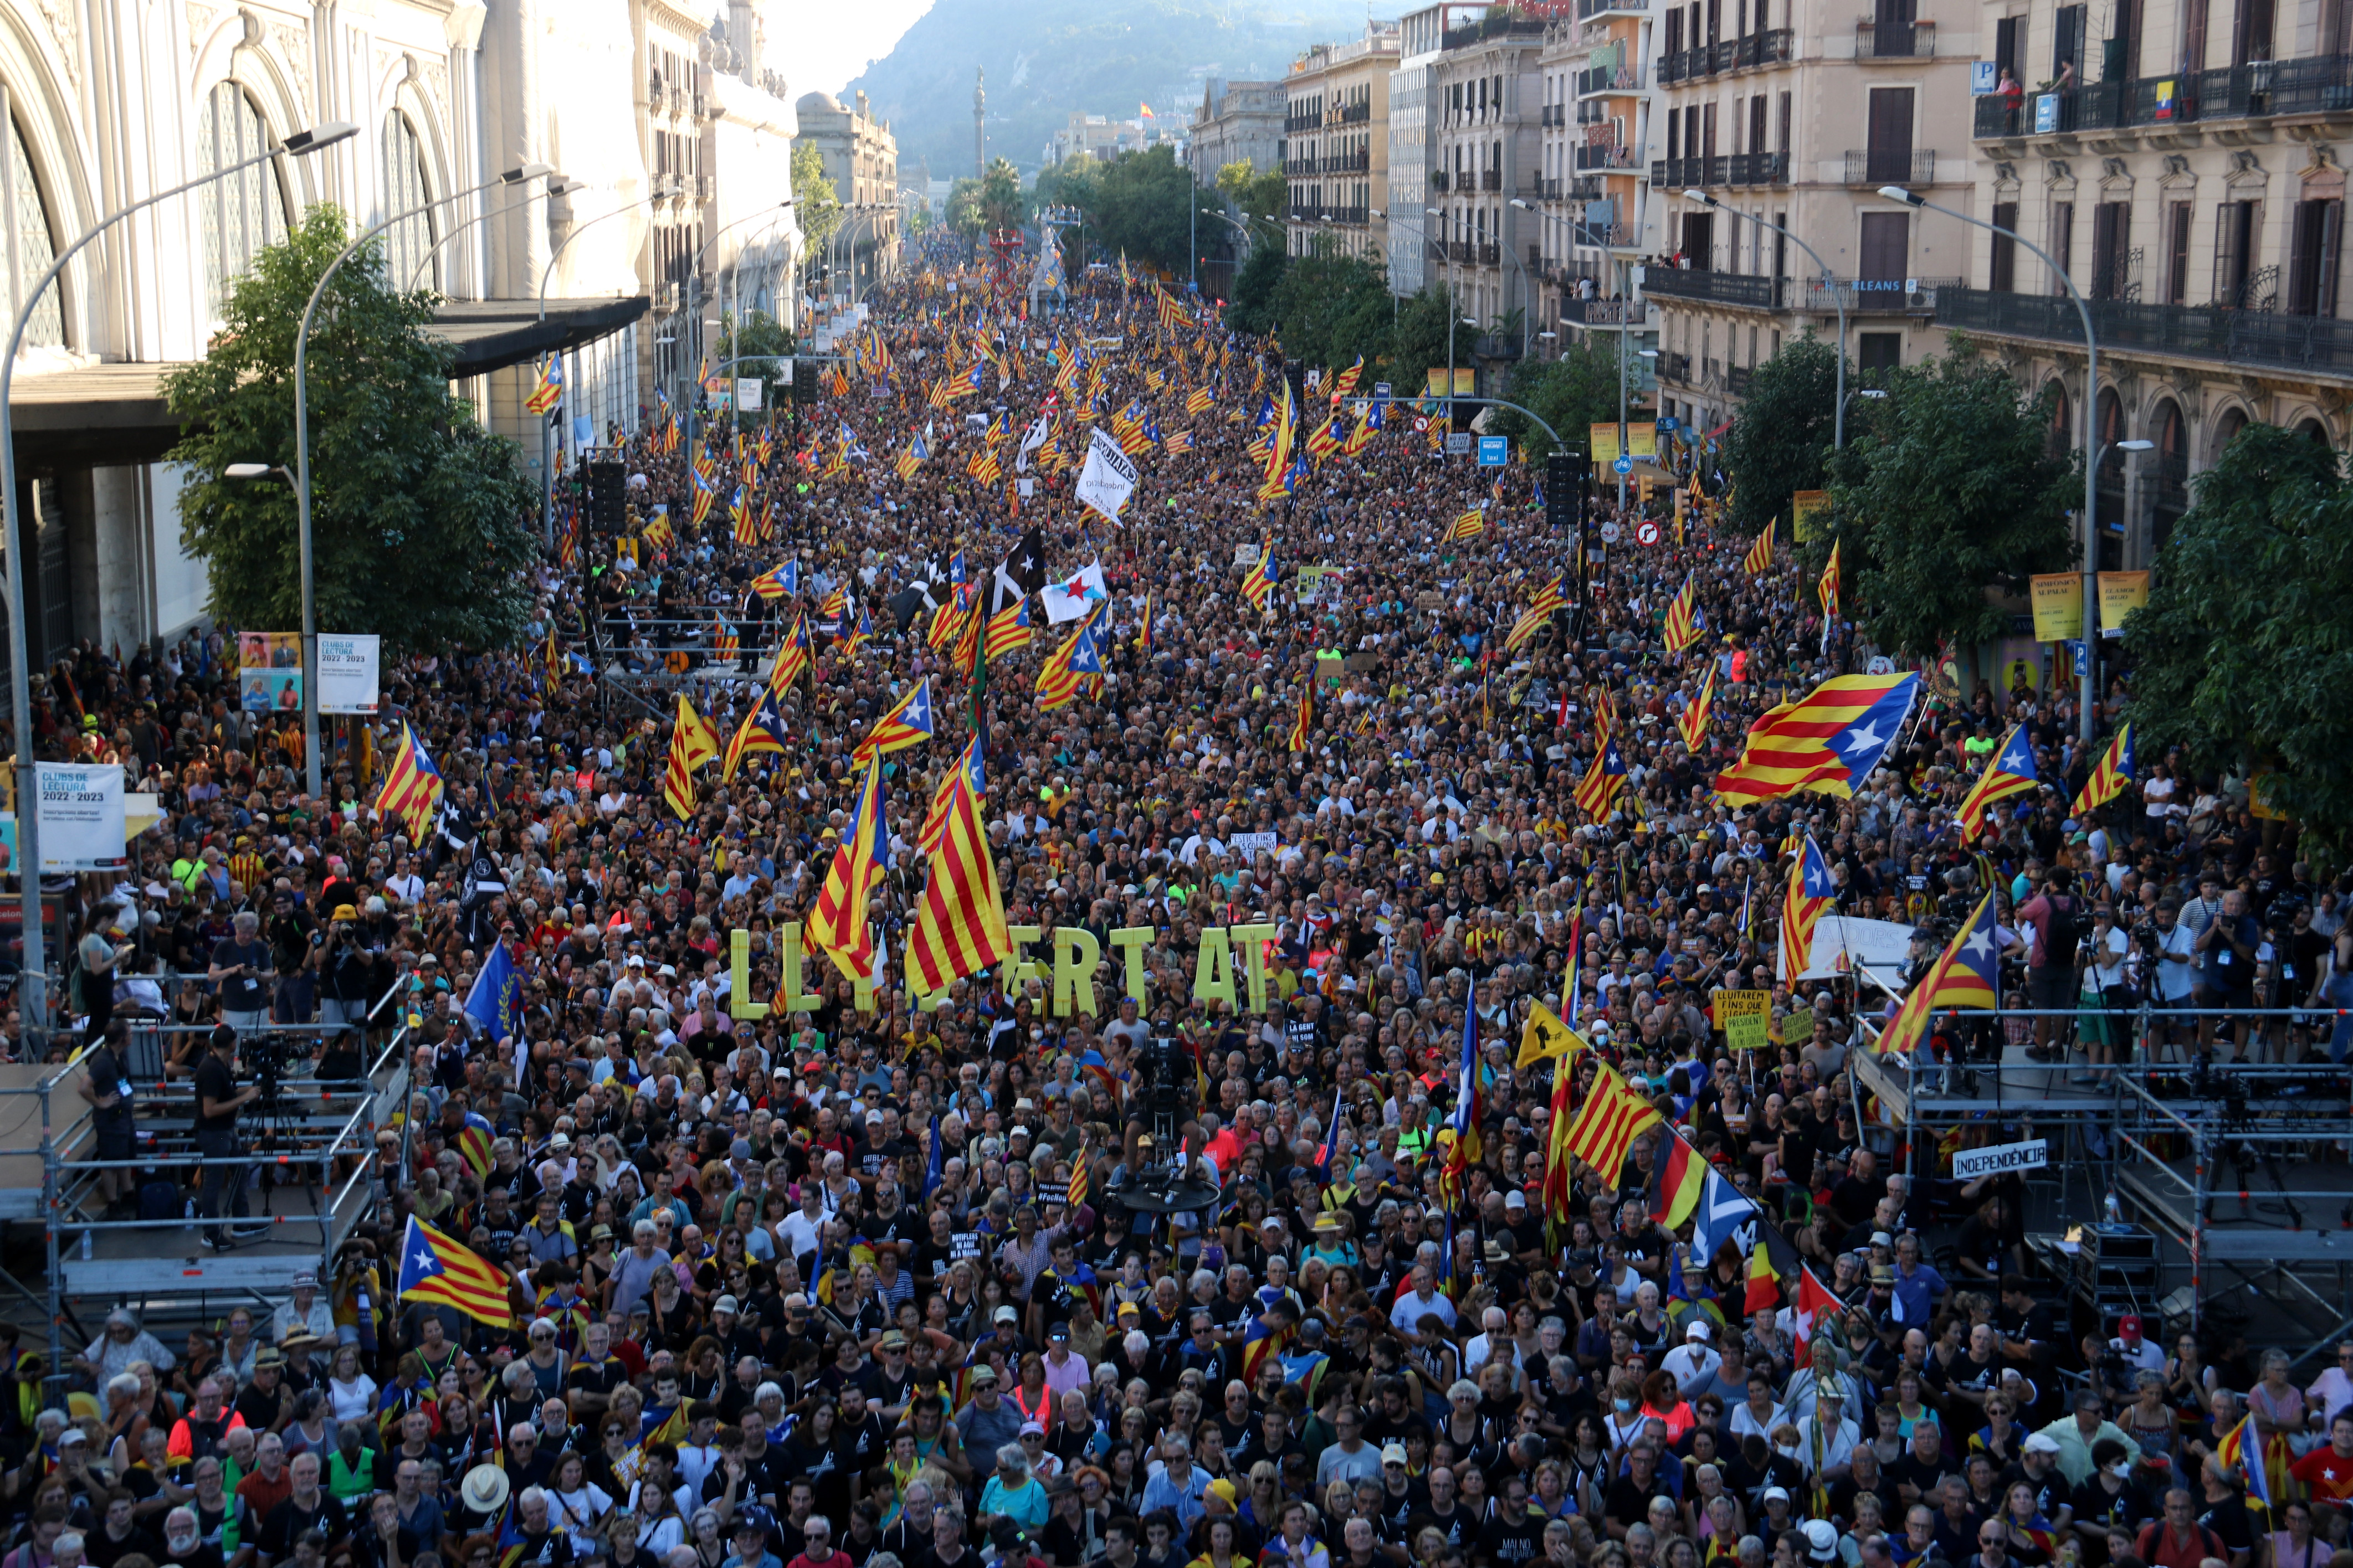 La Diada : fête Nationale de la Catalogne - Catalunya Experience